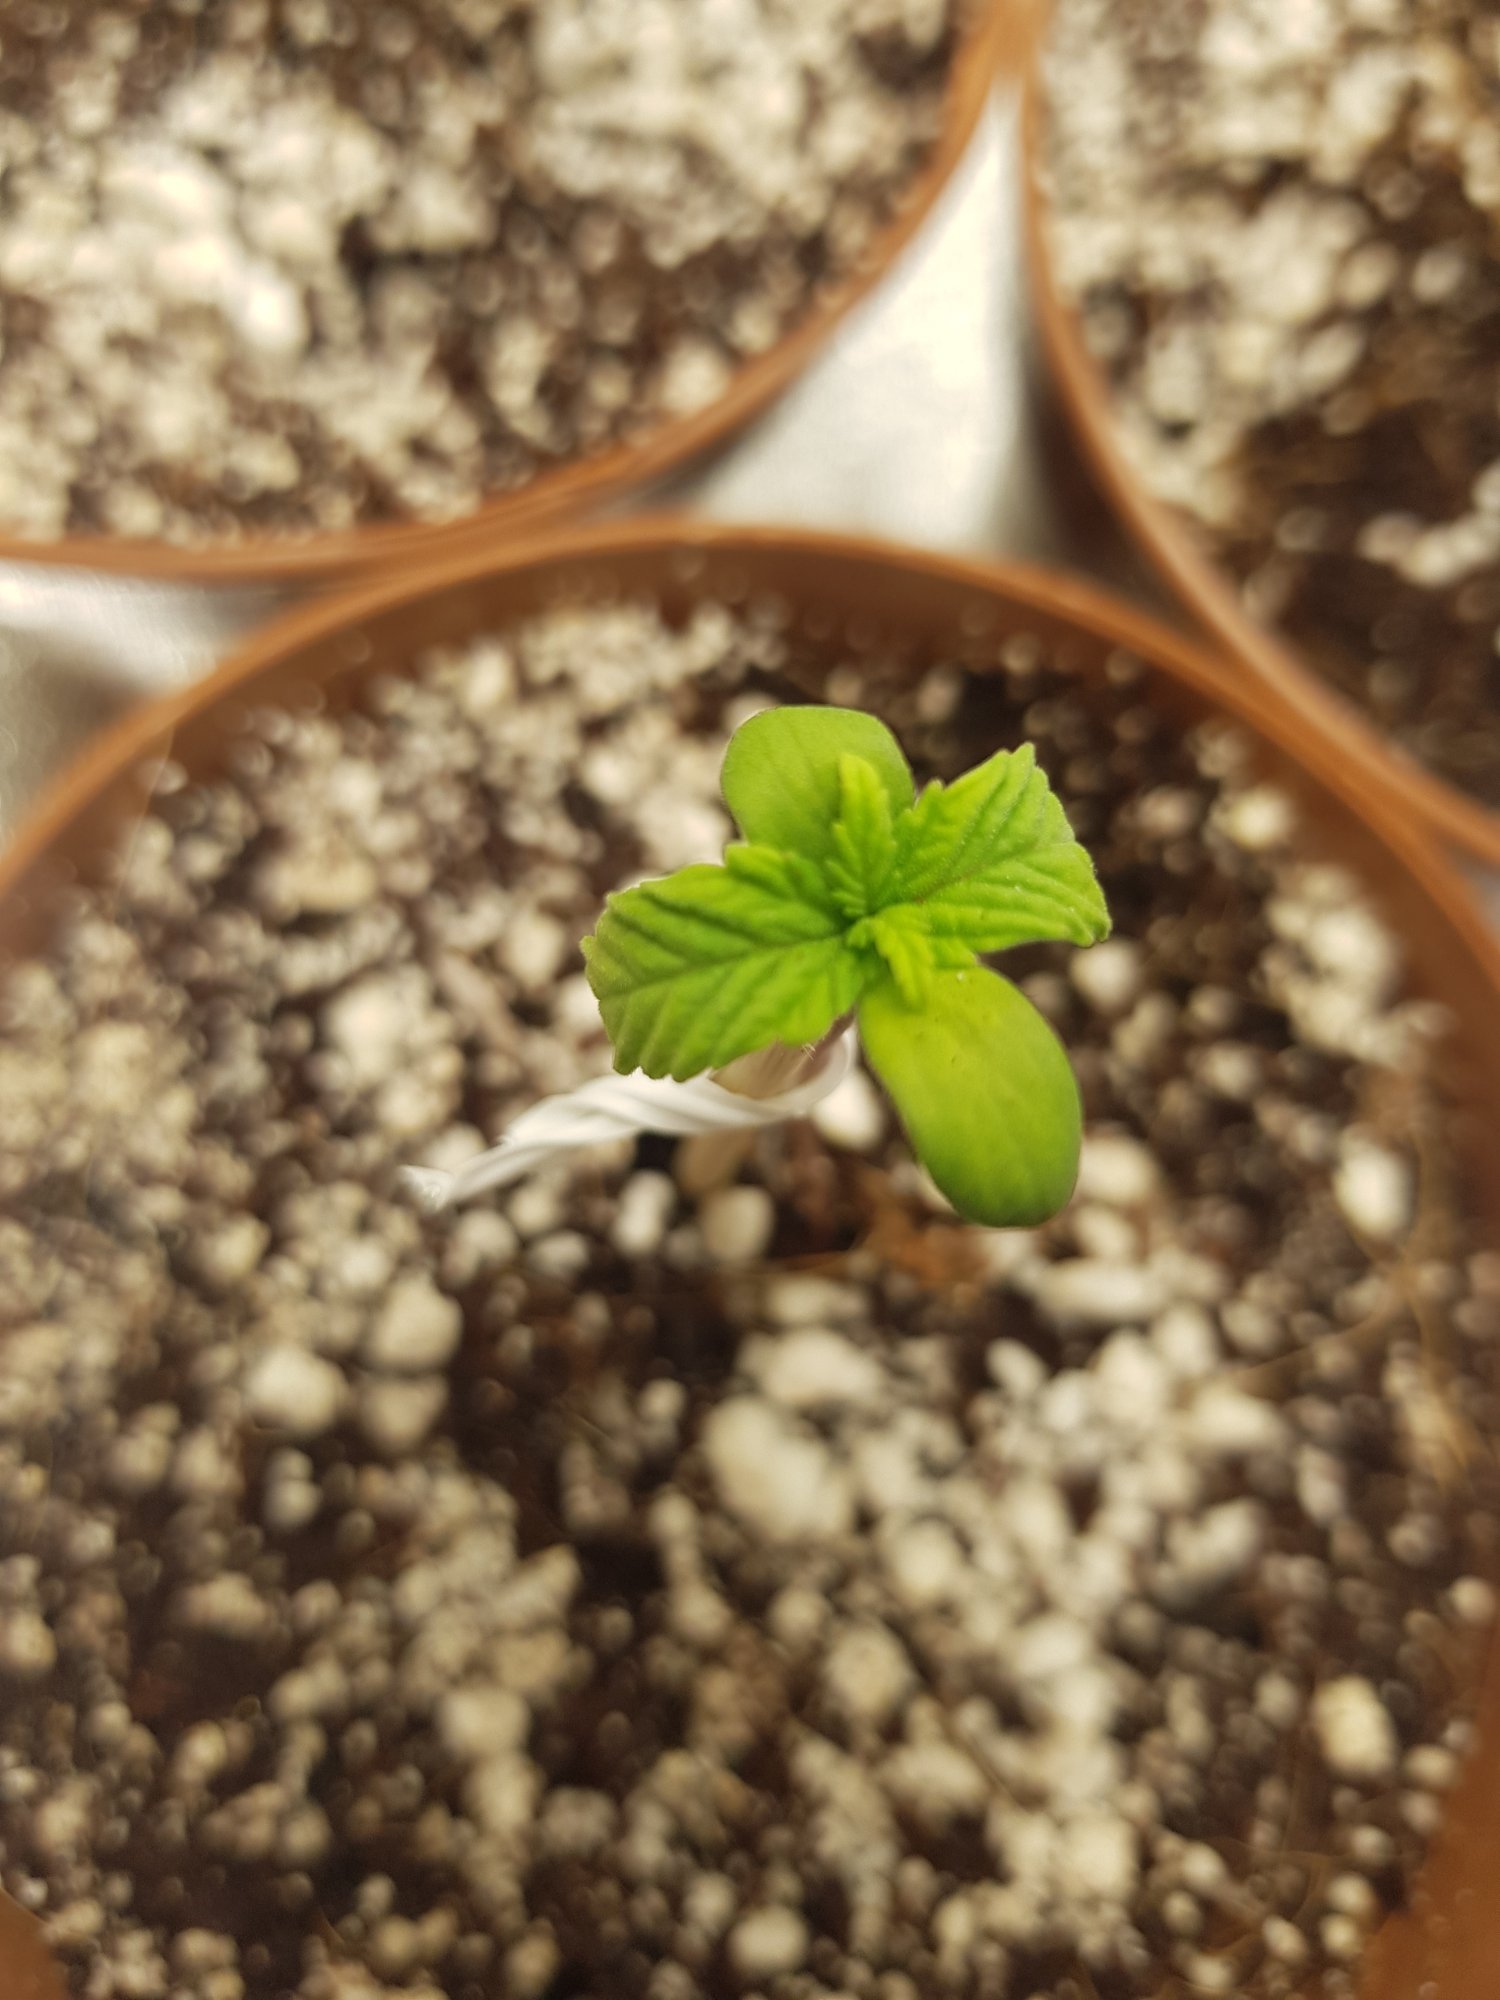 Need help with seedlings please